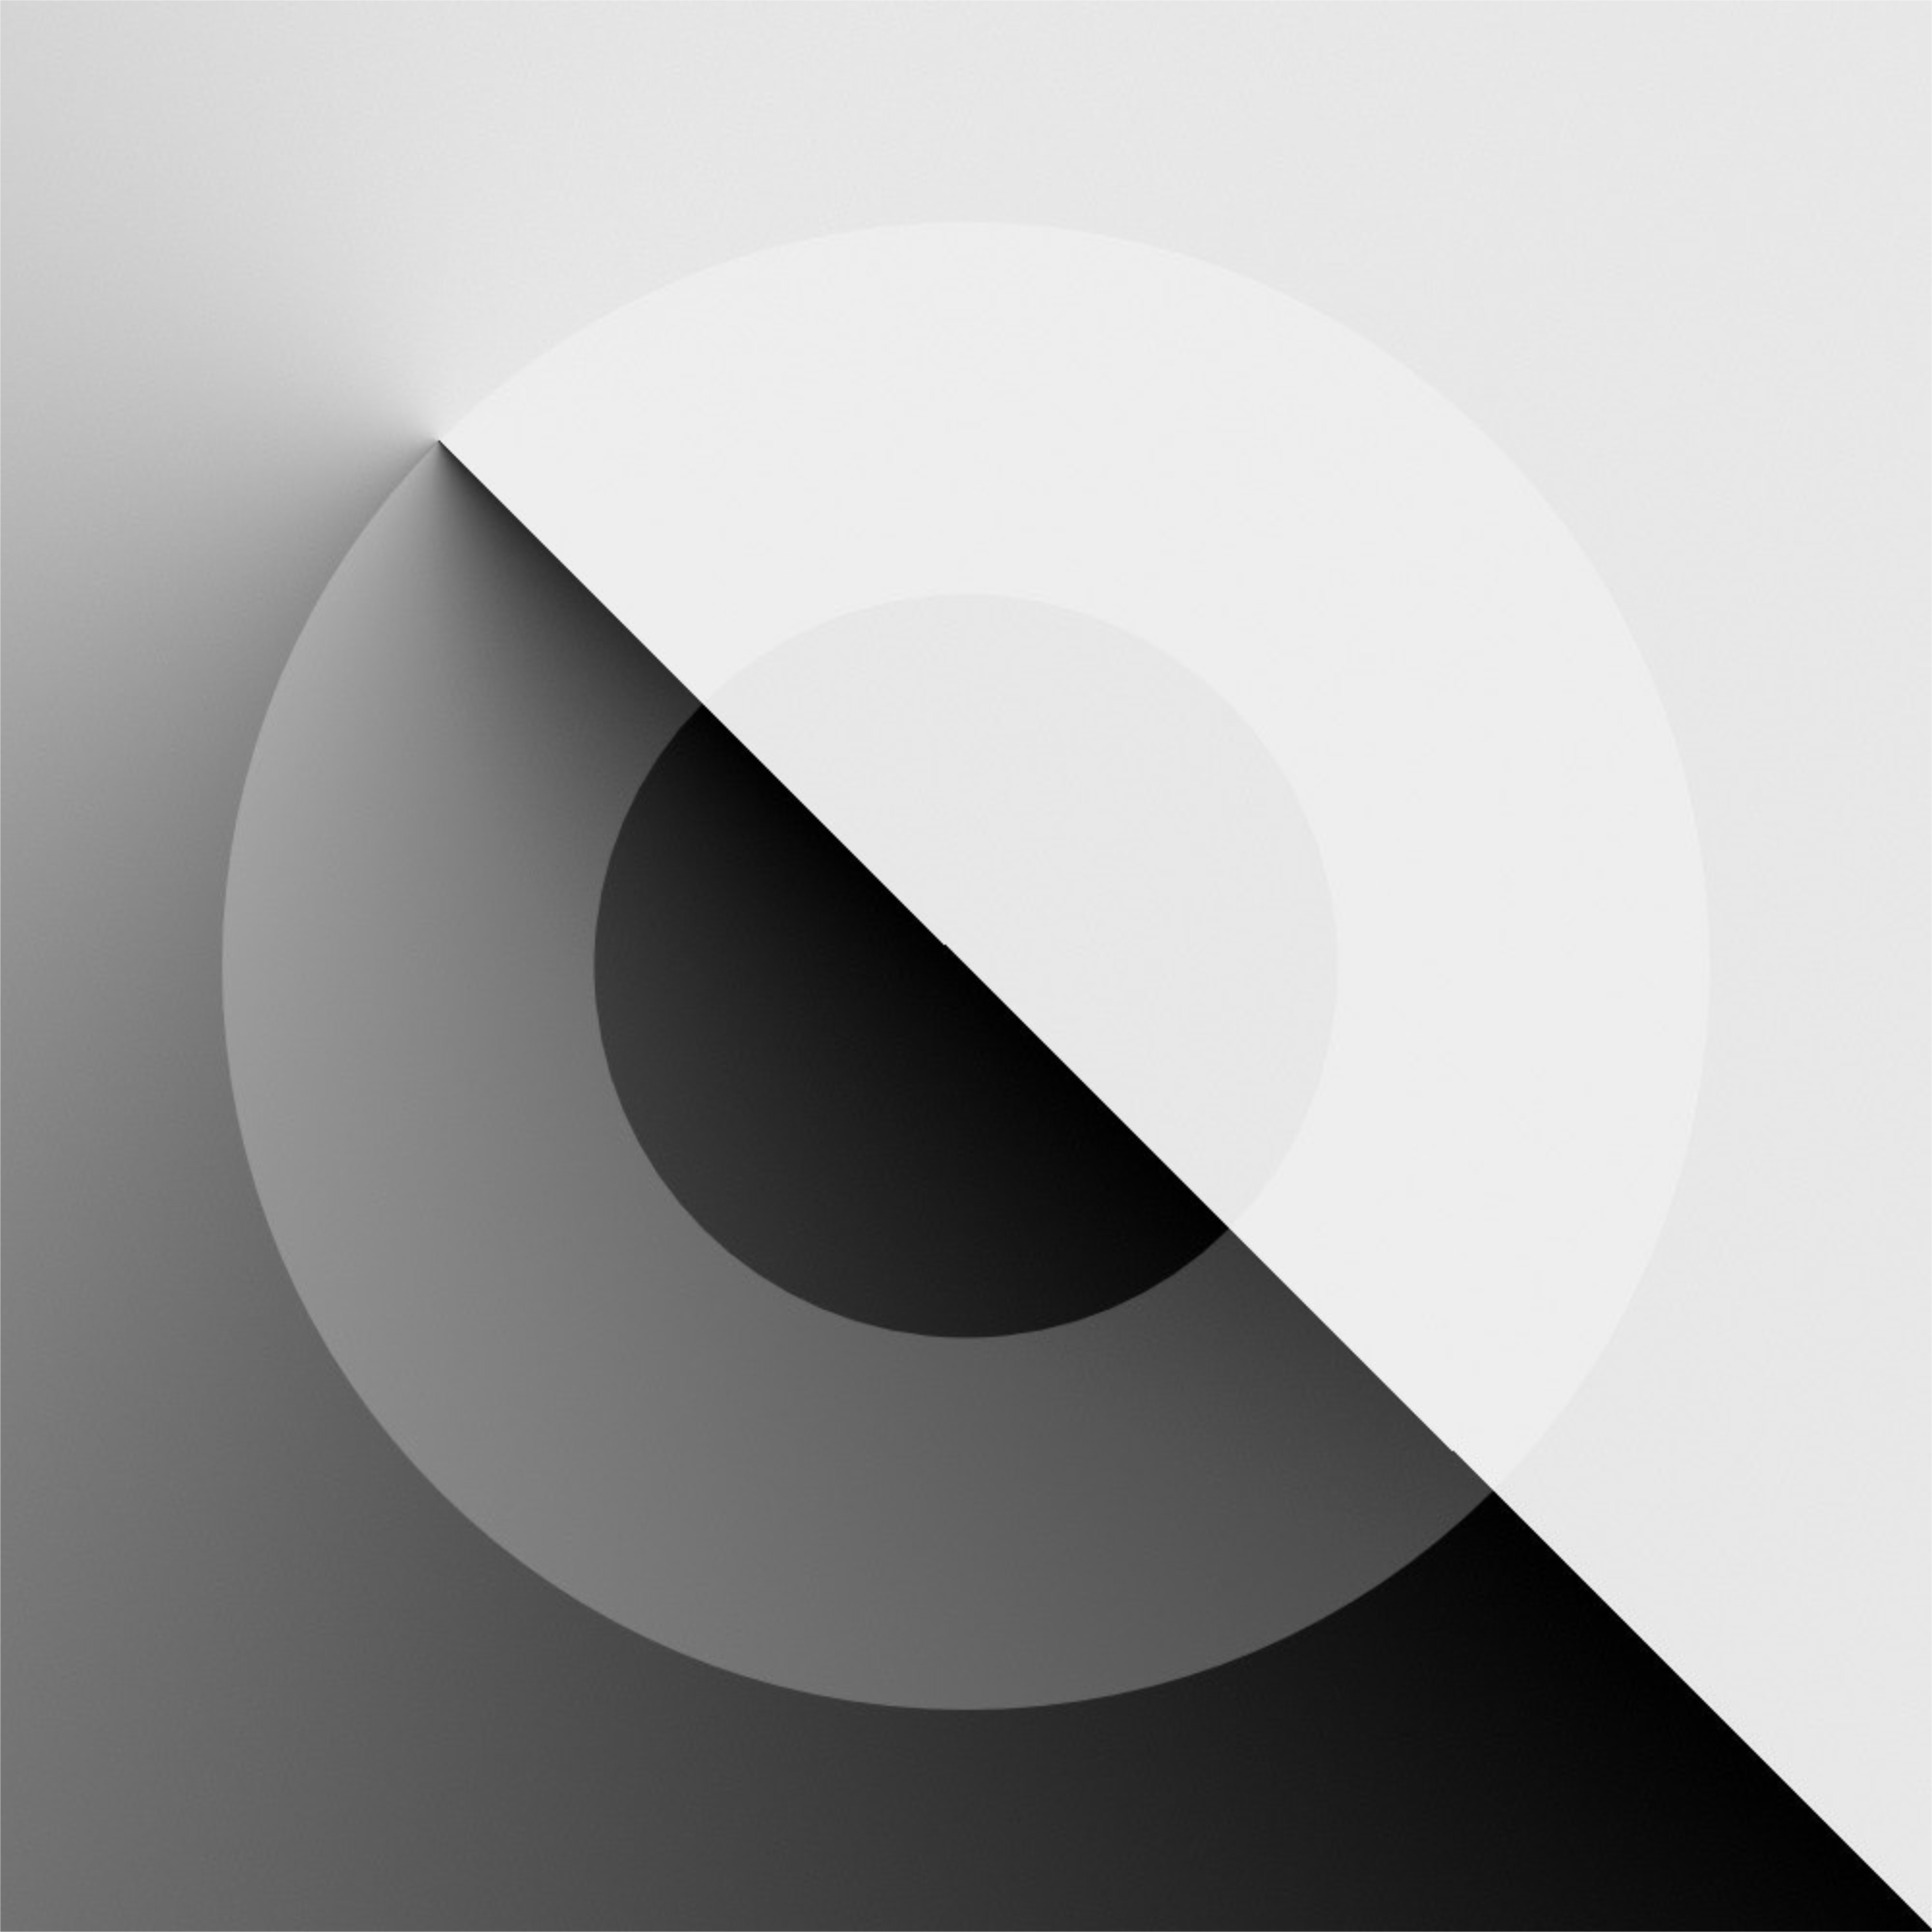 Minimalist Art - 2 circles and a gradient line
